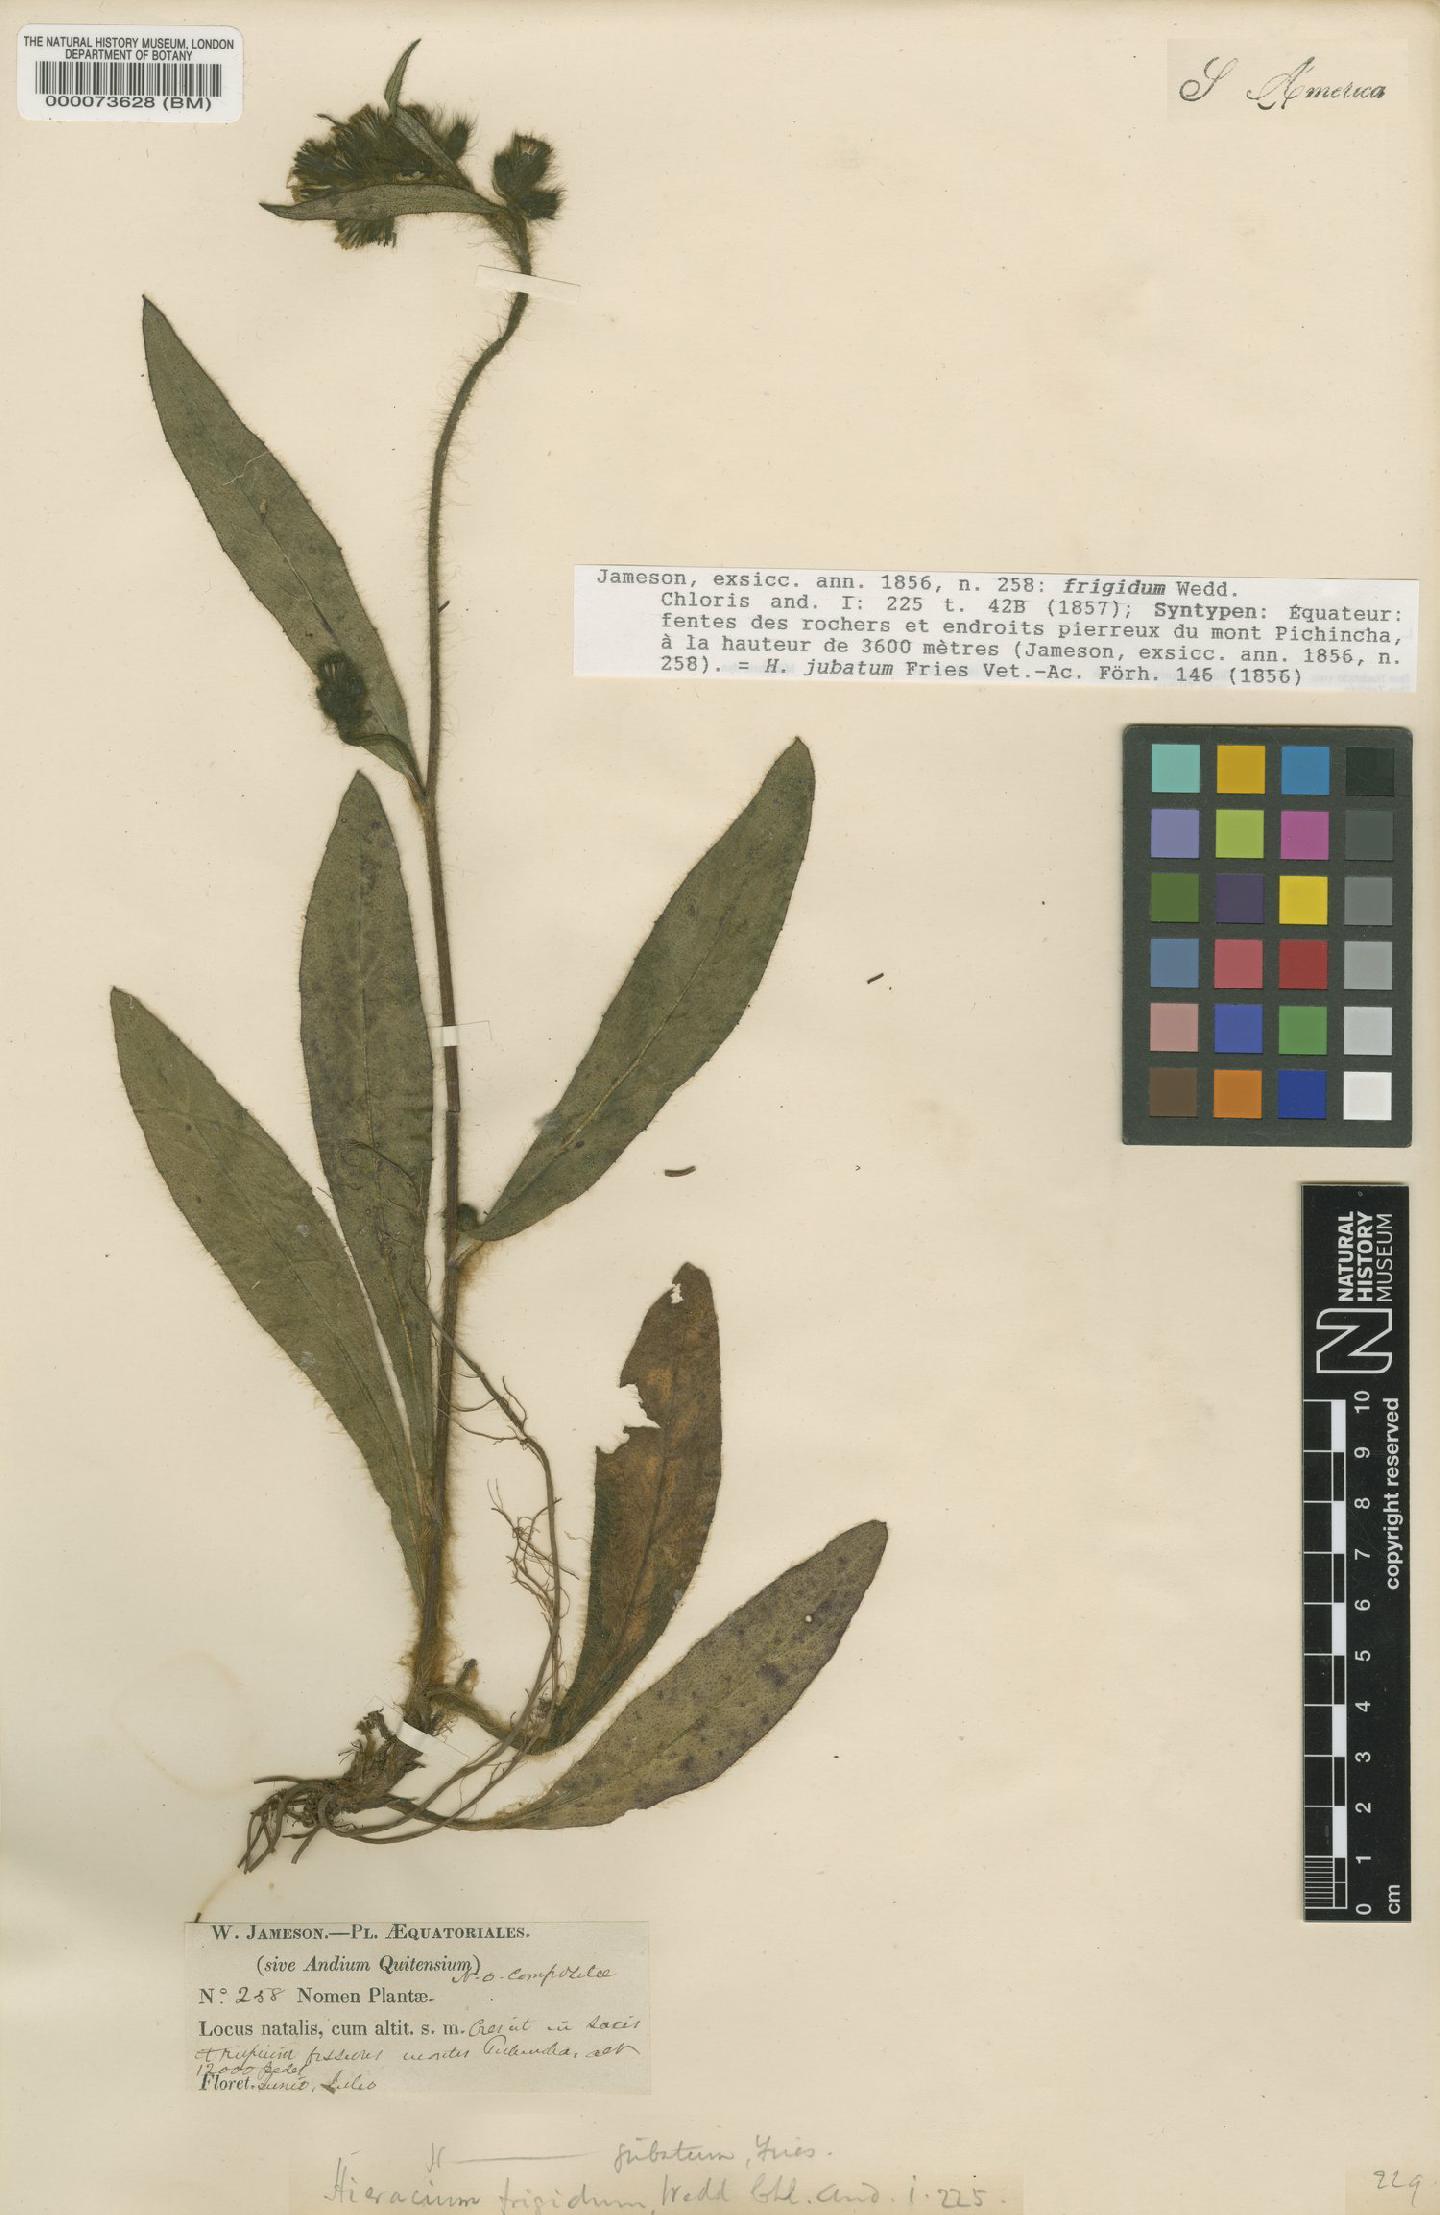 To NHMUK collection (Hieracium jubatum Fr.; Syntype; NHMUK:ecatalogue:5605999)